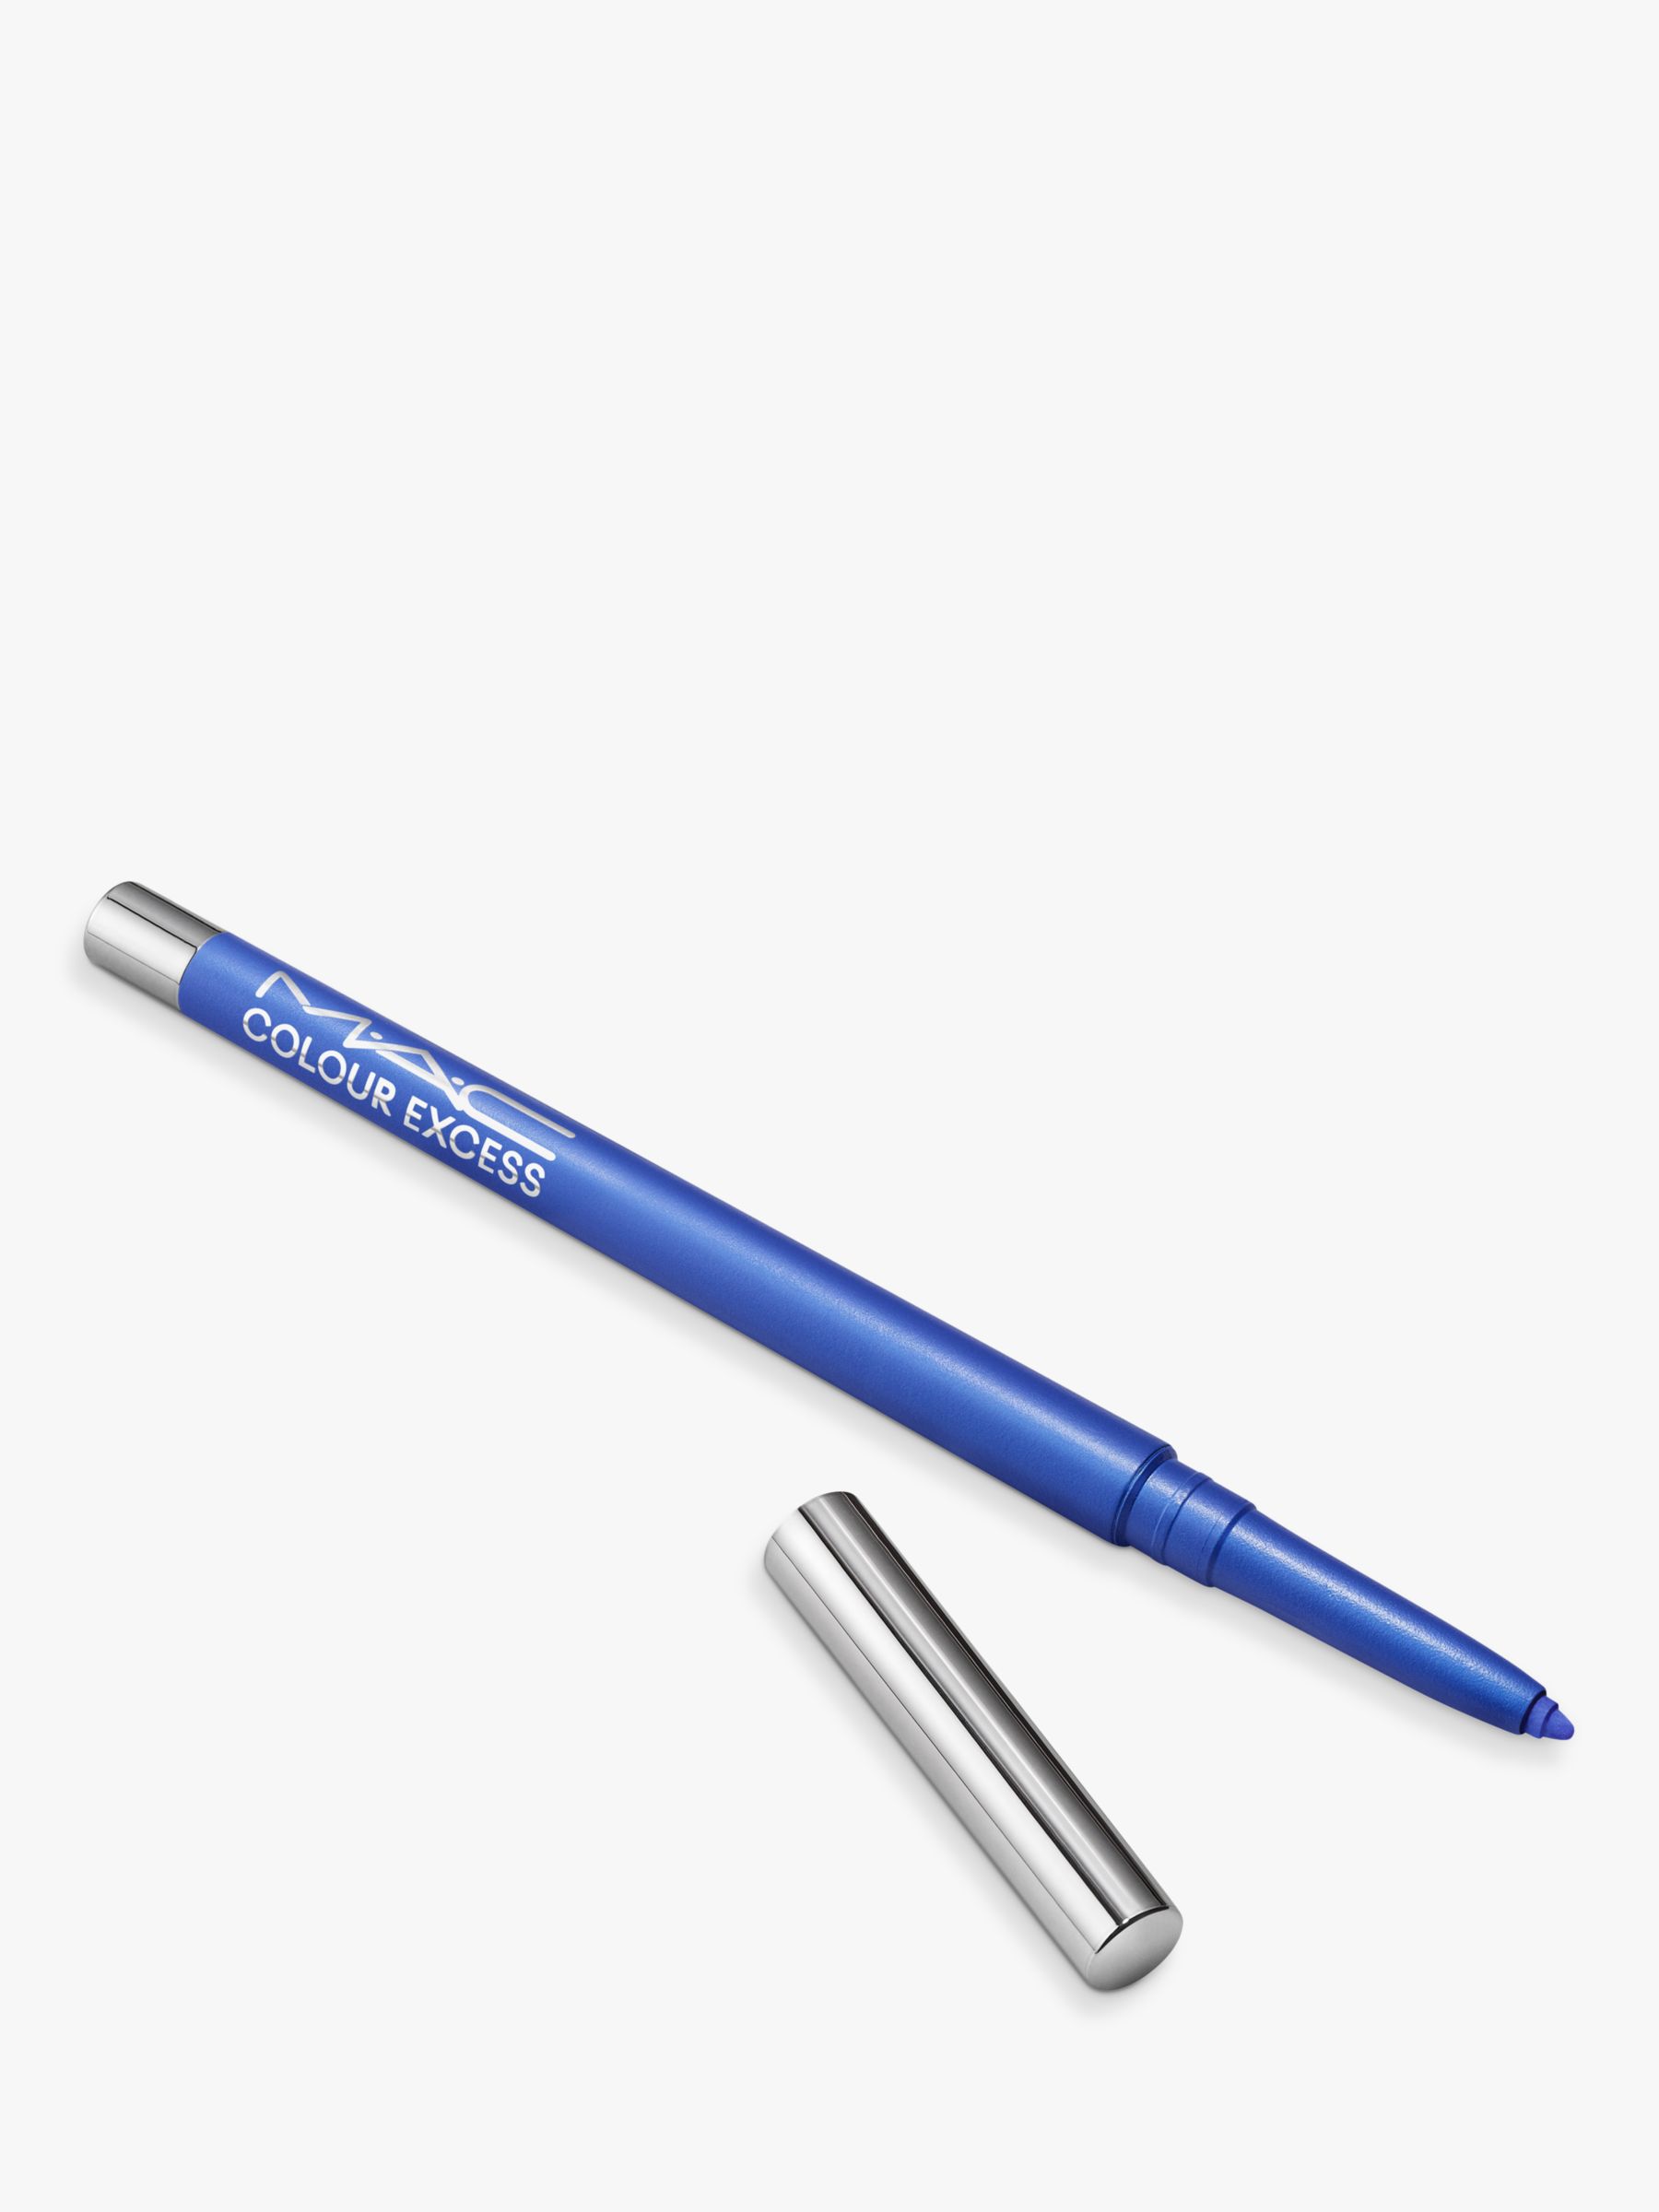 MAC Colour Excess Gel Pencil Eye Liner, Perpetual Shock! 7